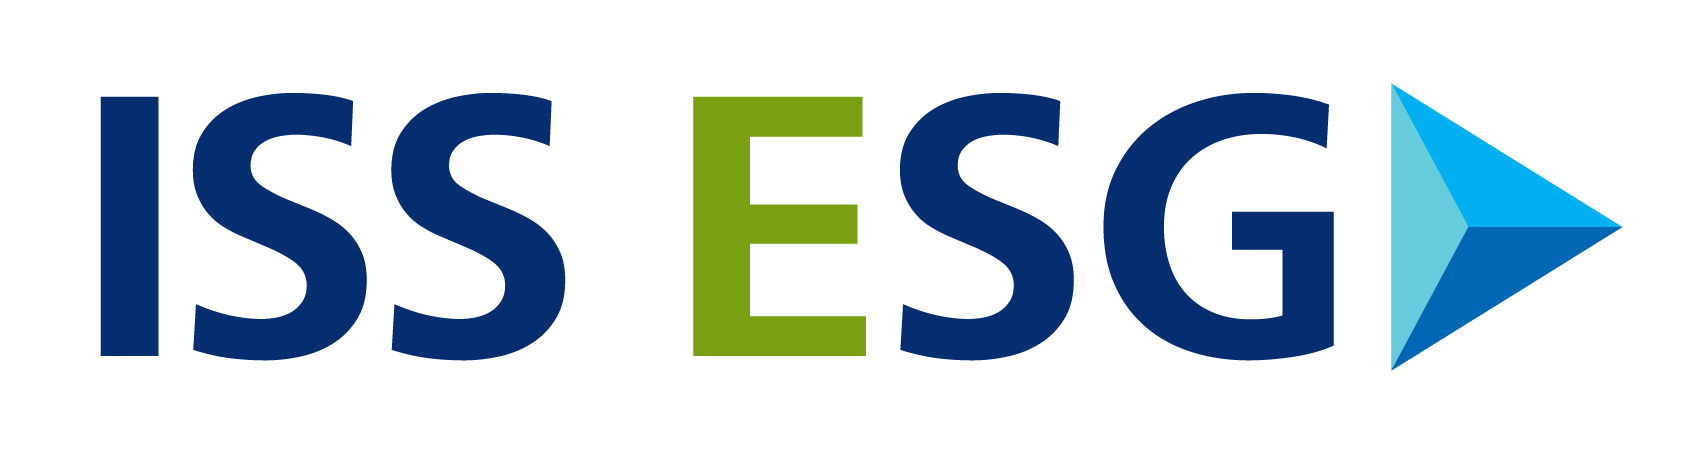 Esg агентства. ESG. ESG проекты. ESG картинки. ESG logo.